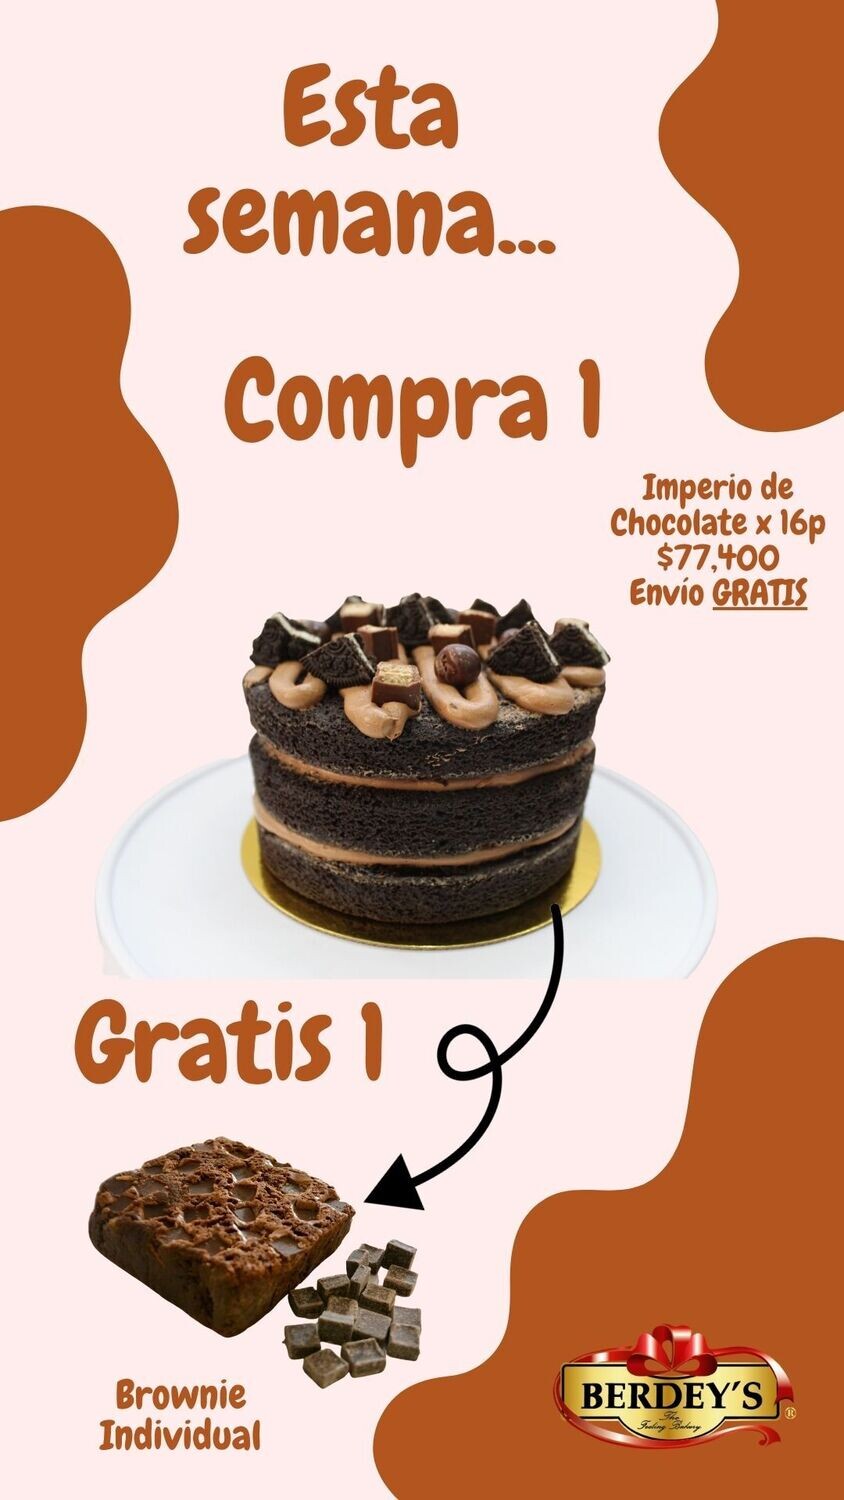 Imperio de Chocolate 16p + Brownie Individual GRATIS + ENVIO GRATIS